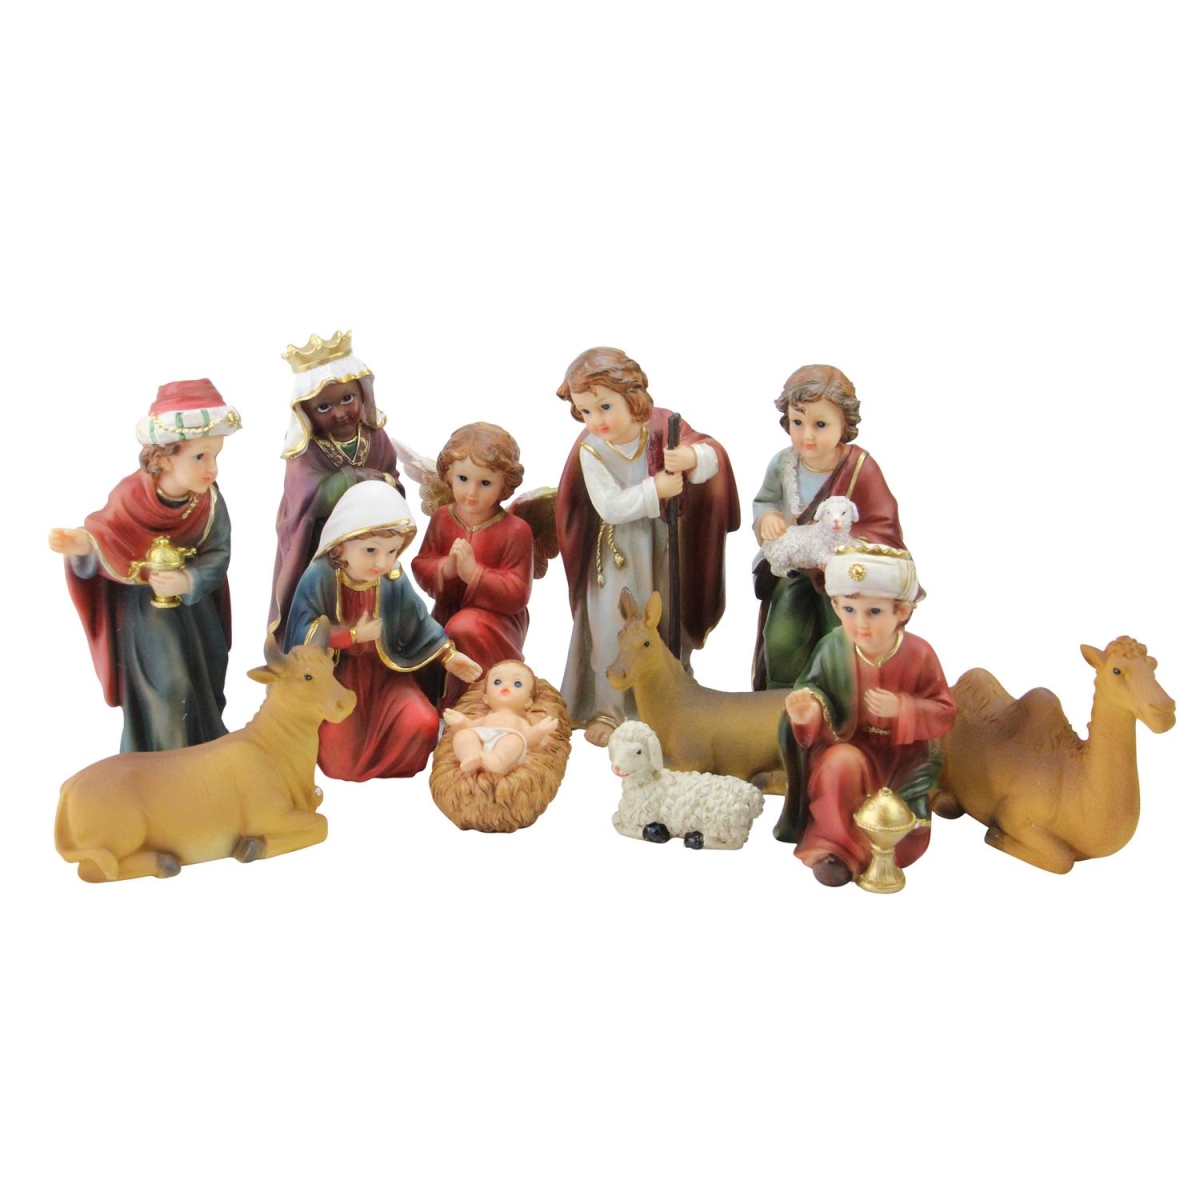 Northlight 32625057 Religious Childrens First Christmas Nativity Set - 12 Piece